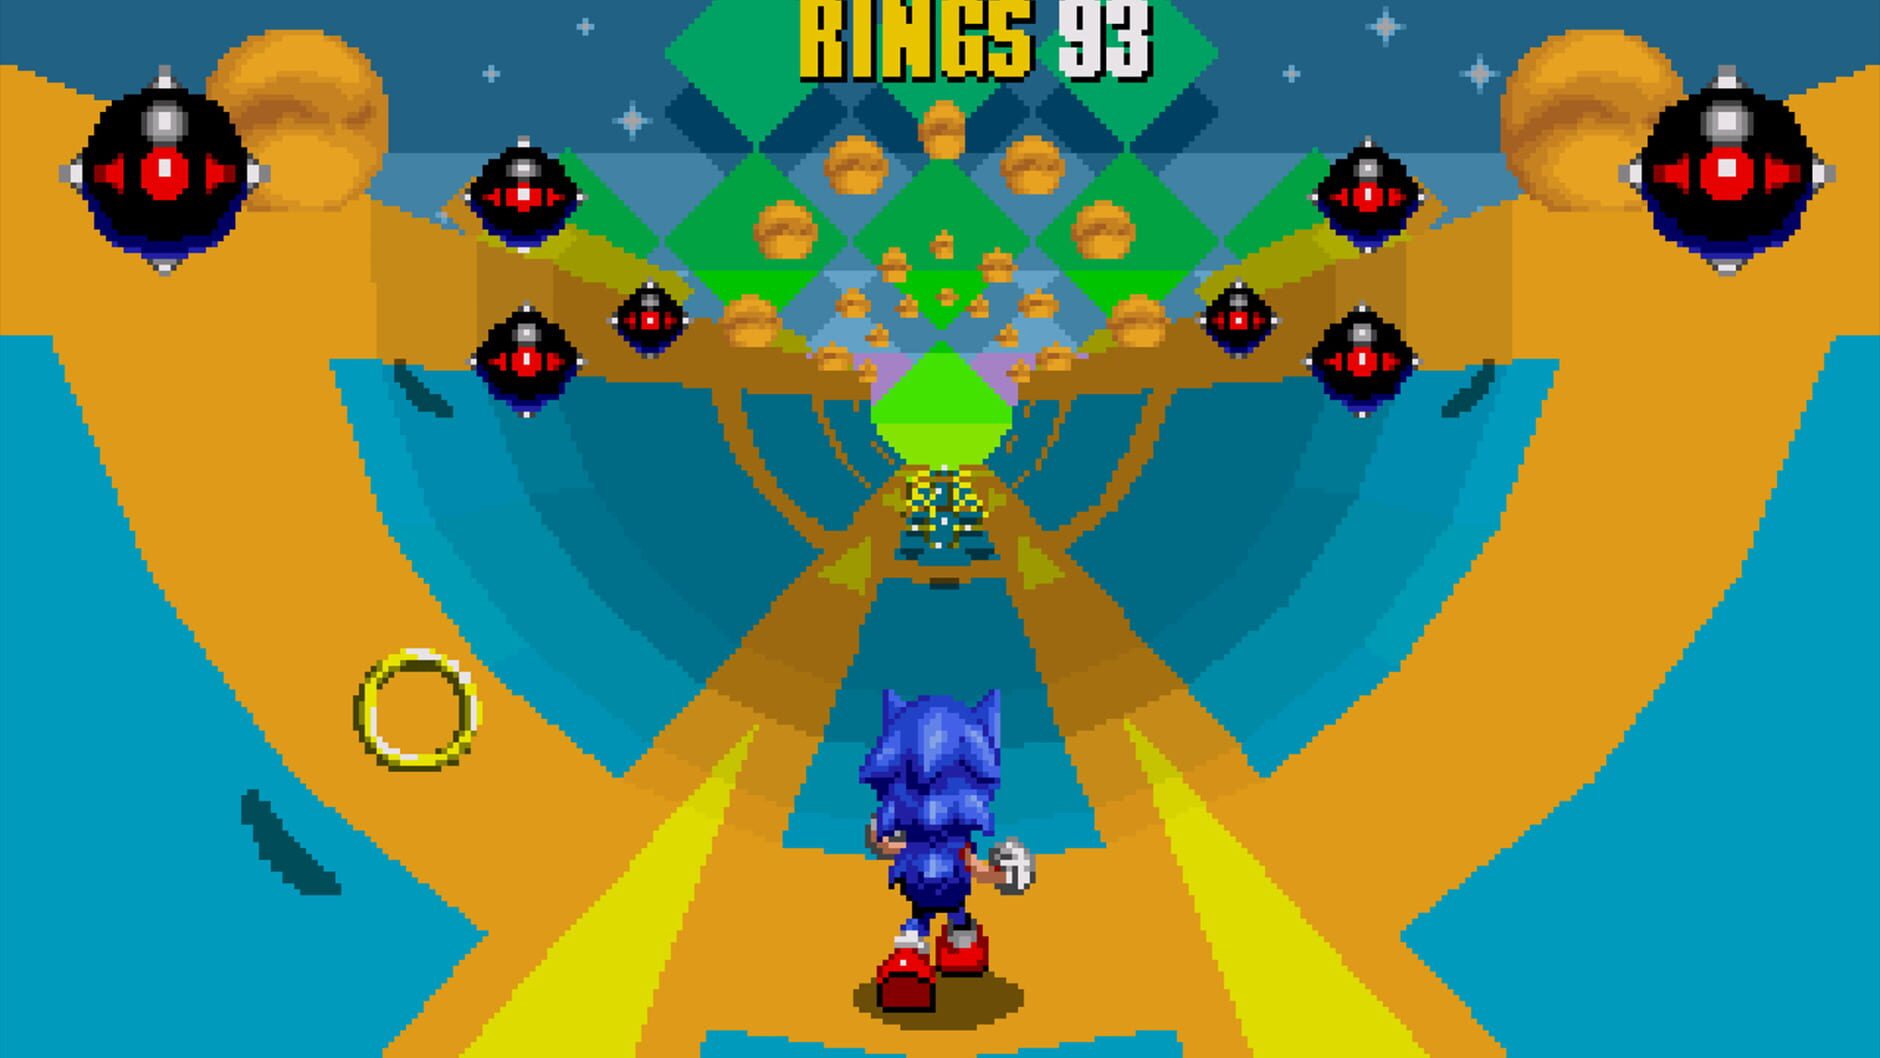 Screenshot for Sonic the Hedgehog 2